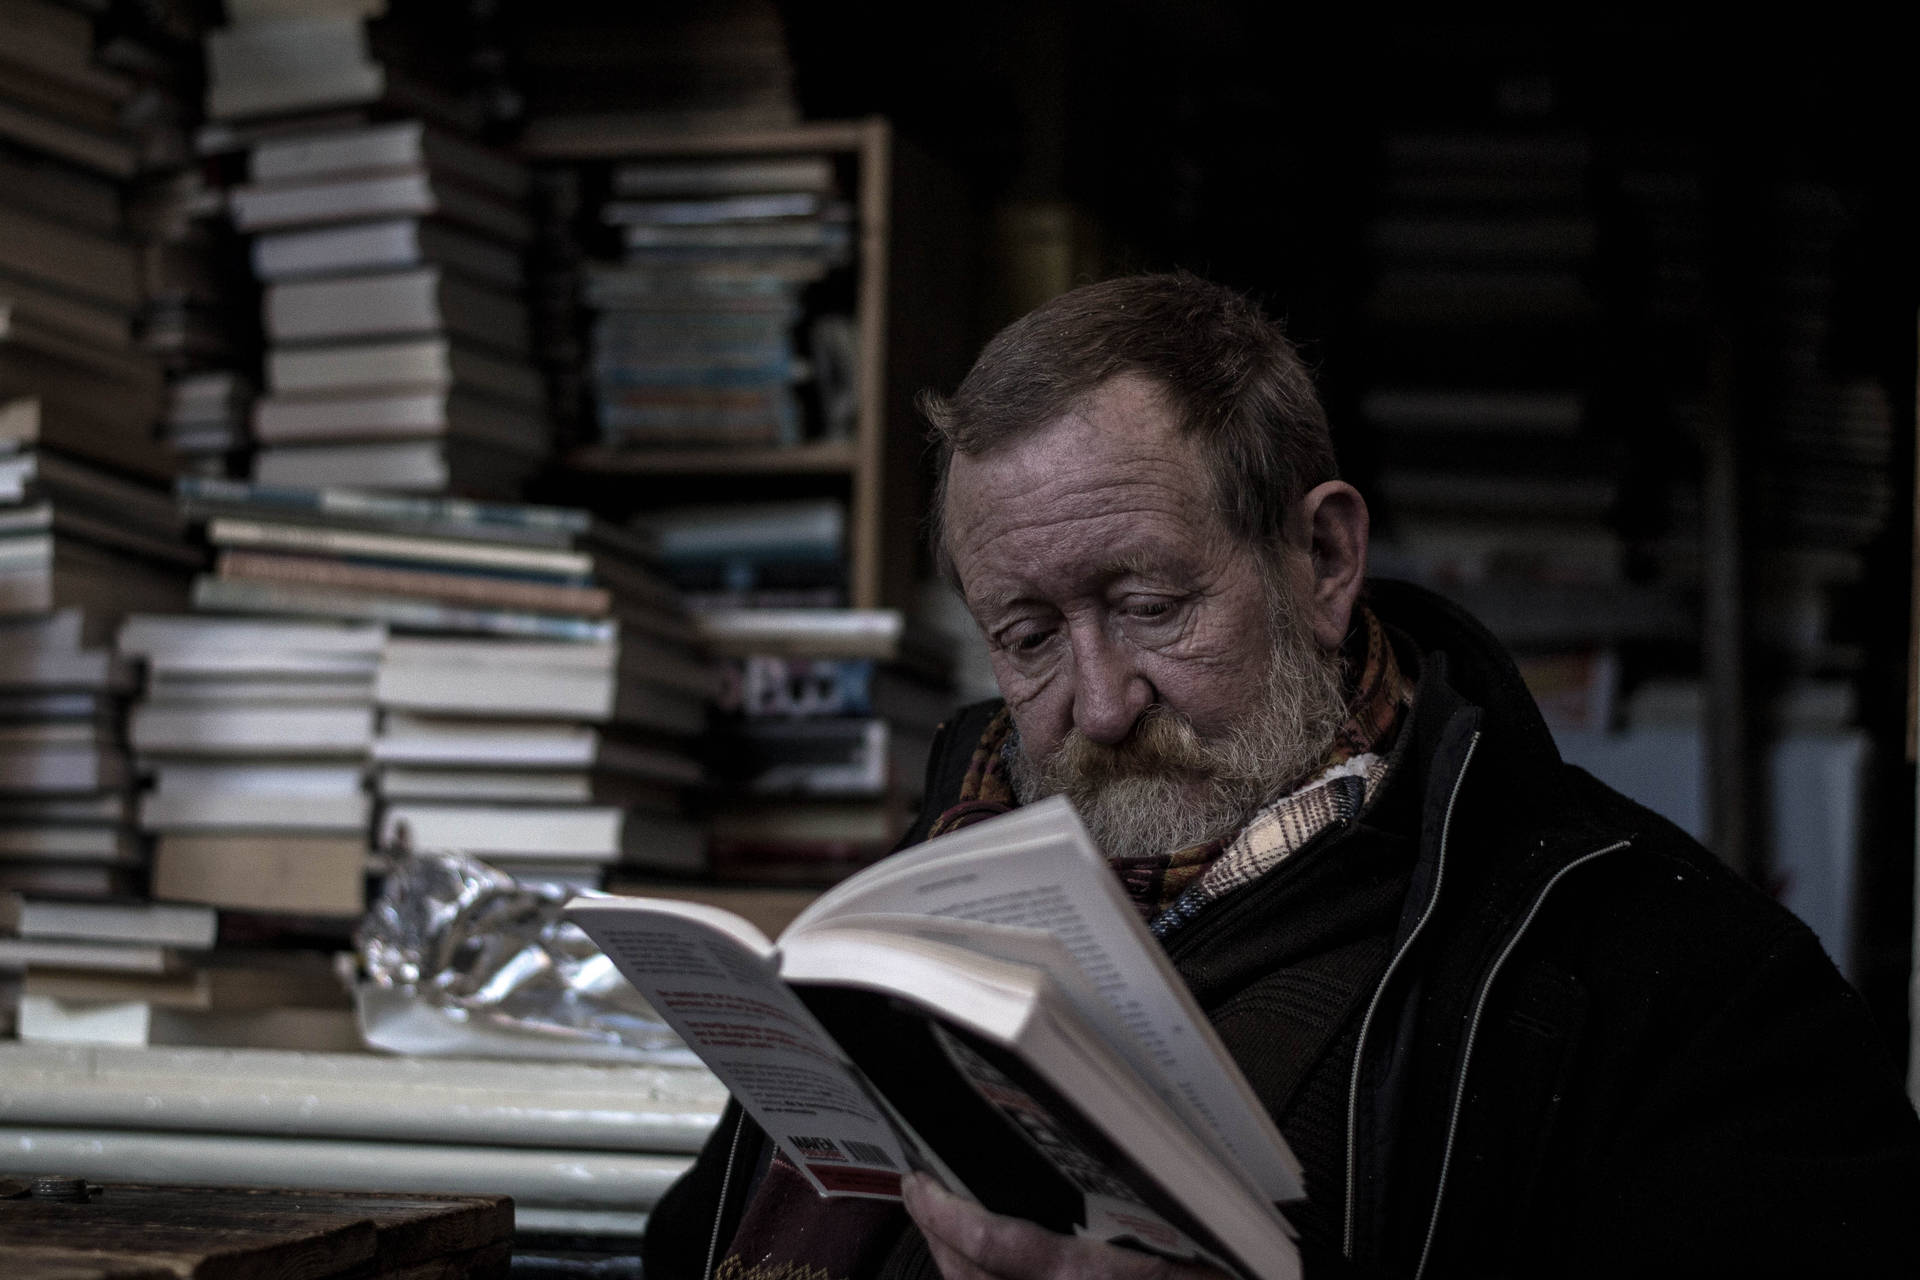 Old Man Reading Books